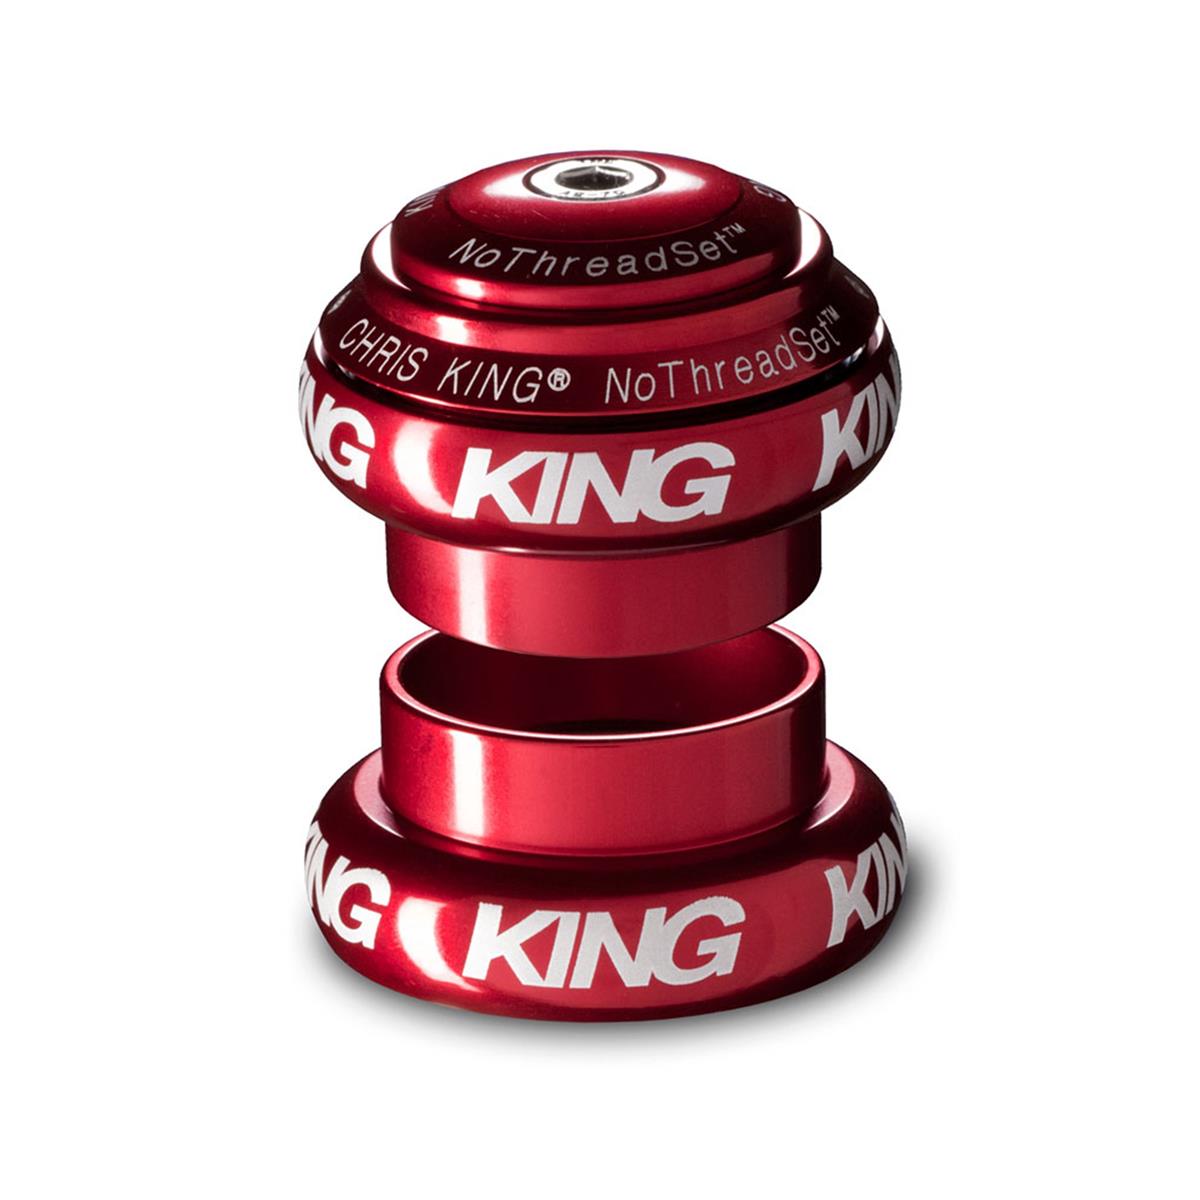 Chris King Headset EC - EC NoThreadSet EC34 - EC34, 1 1/8 Inches, Red, GripLock, Logo Bold